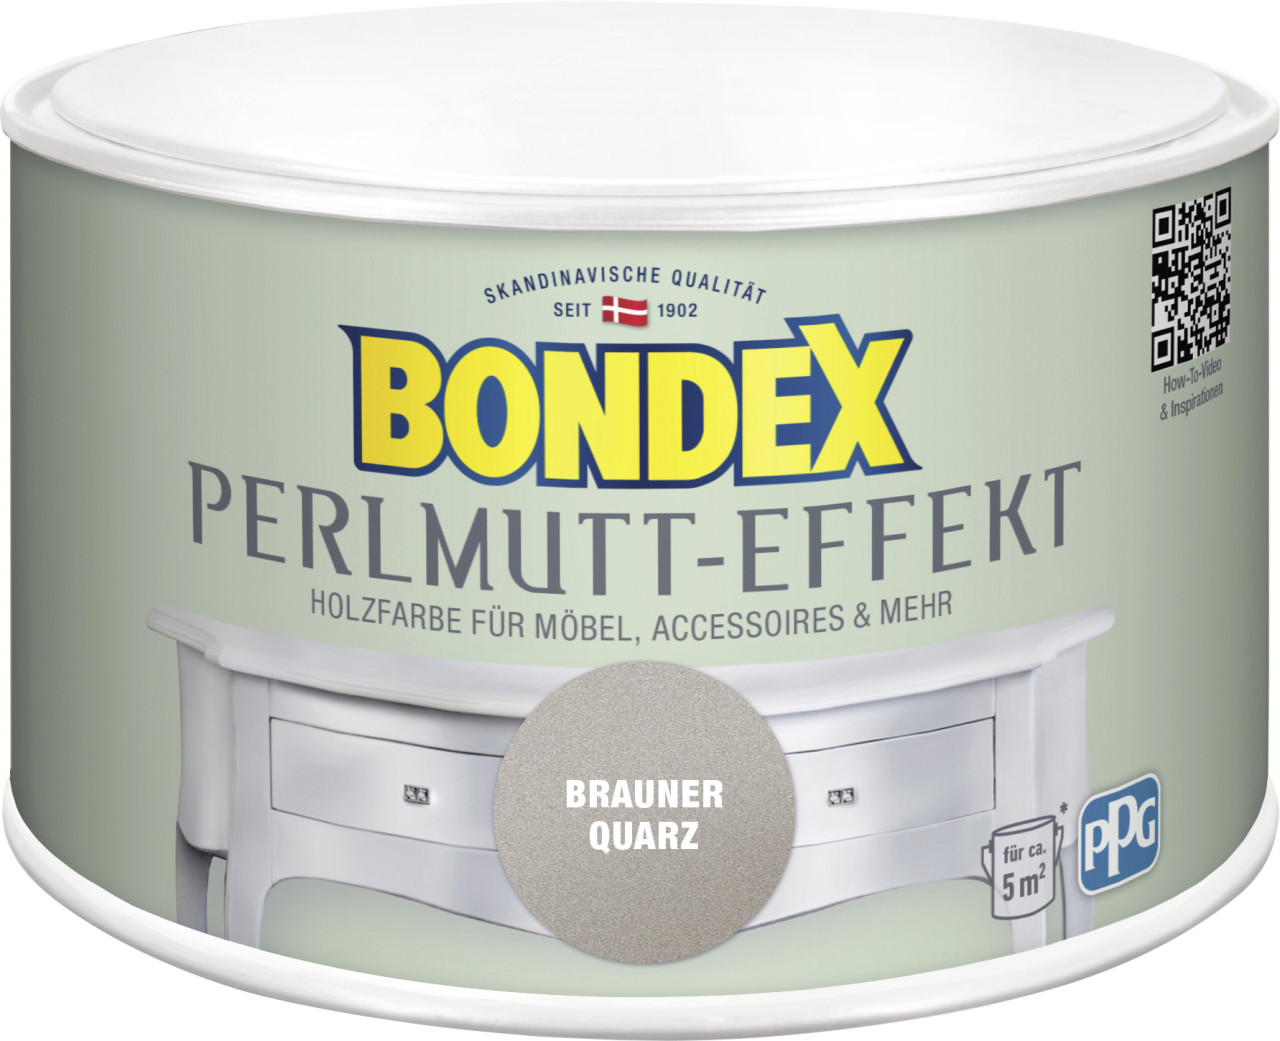 Bondex Holzfarbe Perlmutt-Effekt 500 ml brauner quarz von Bondex